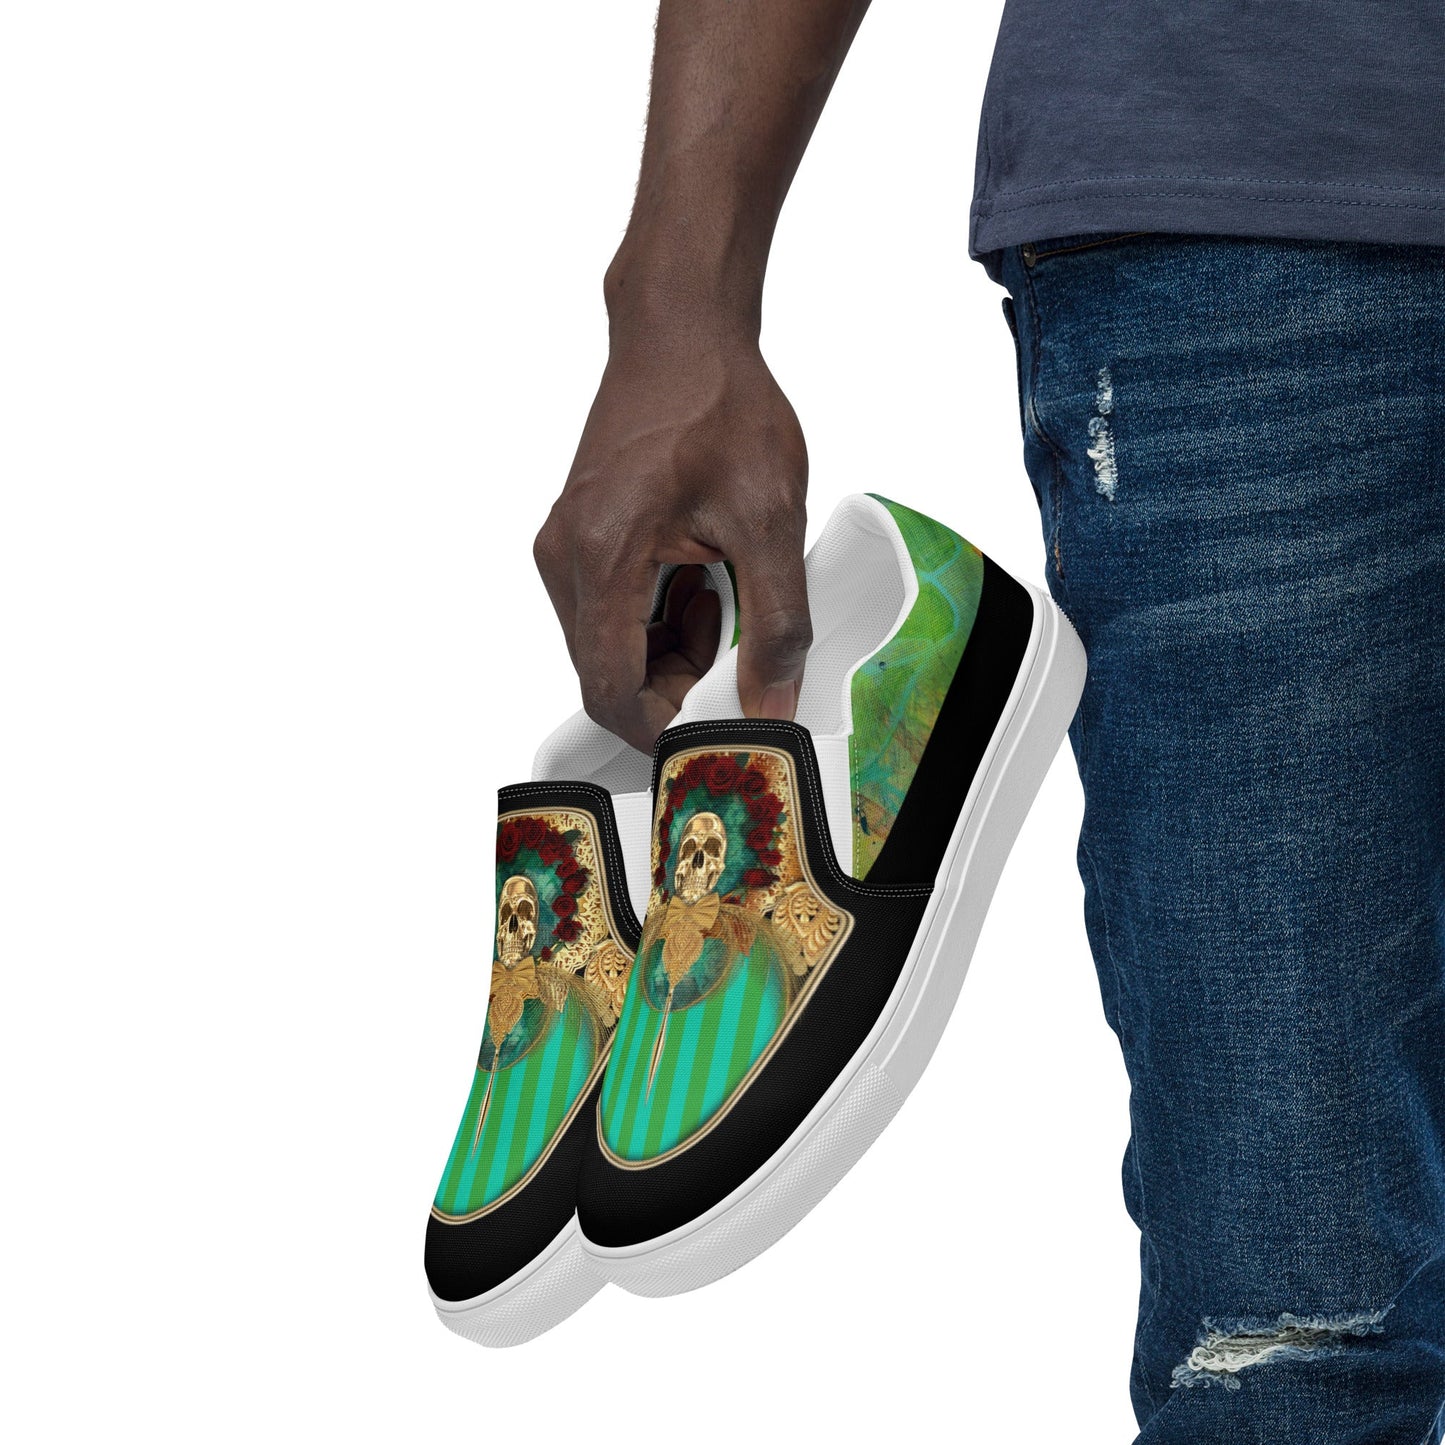 klasneakers Men’s slip-on canvas shoes - Green Skull